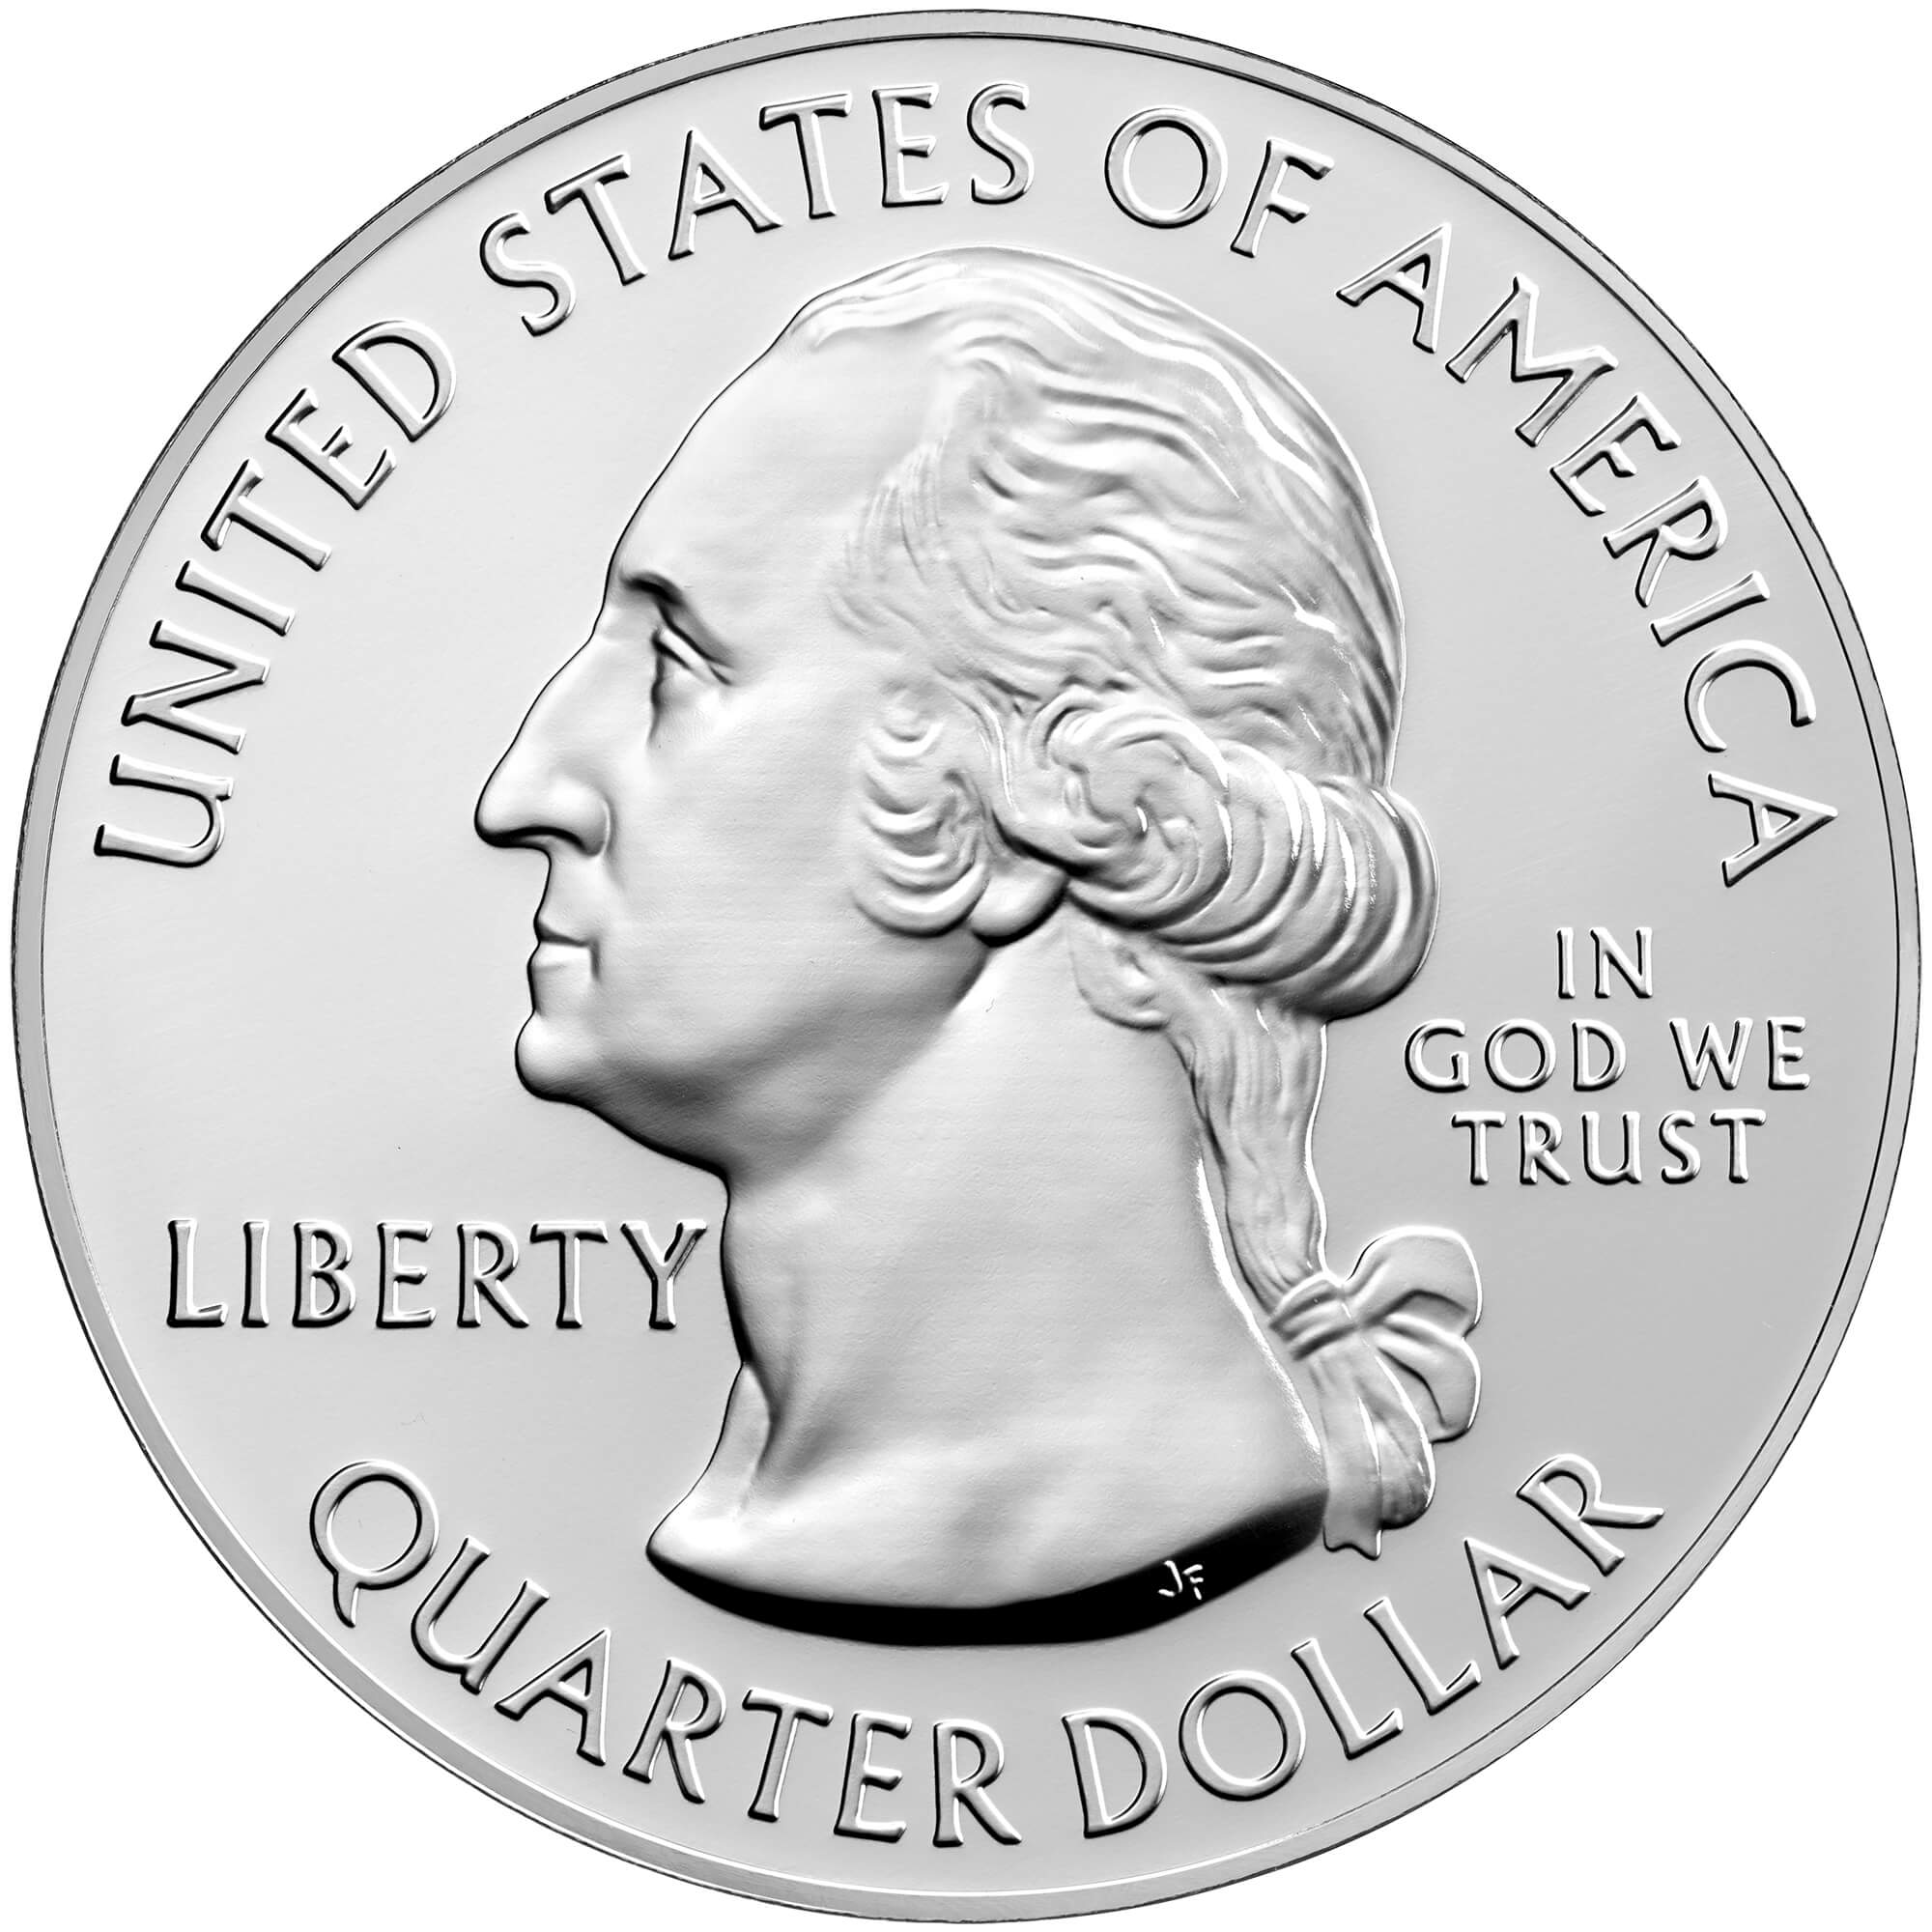 US 1/4 Dollar - Quarter 2012 no mintmark